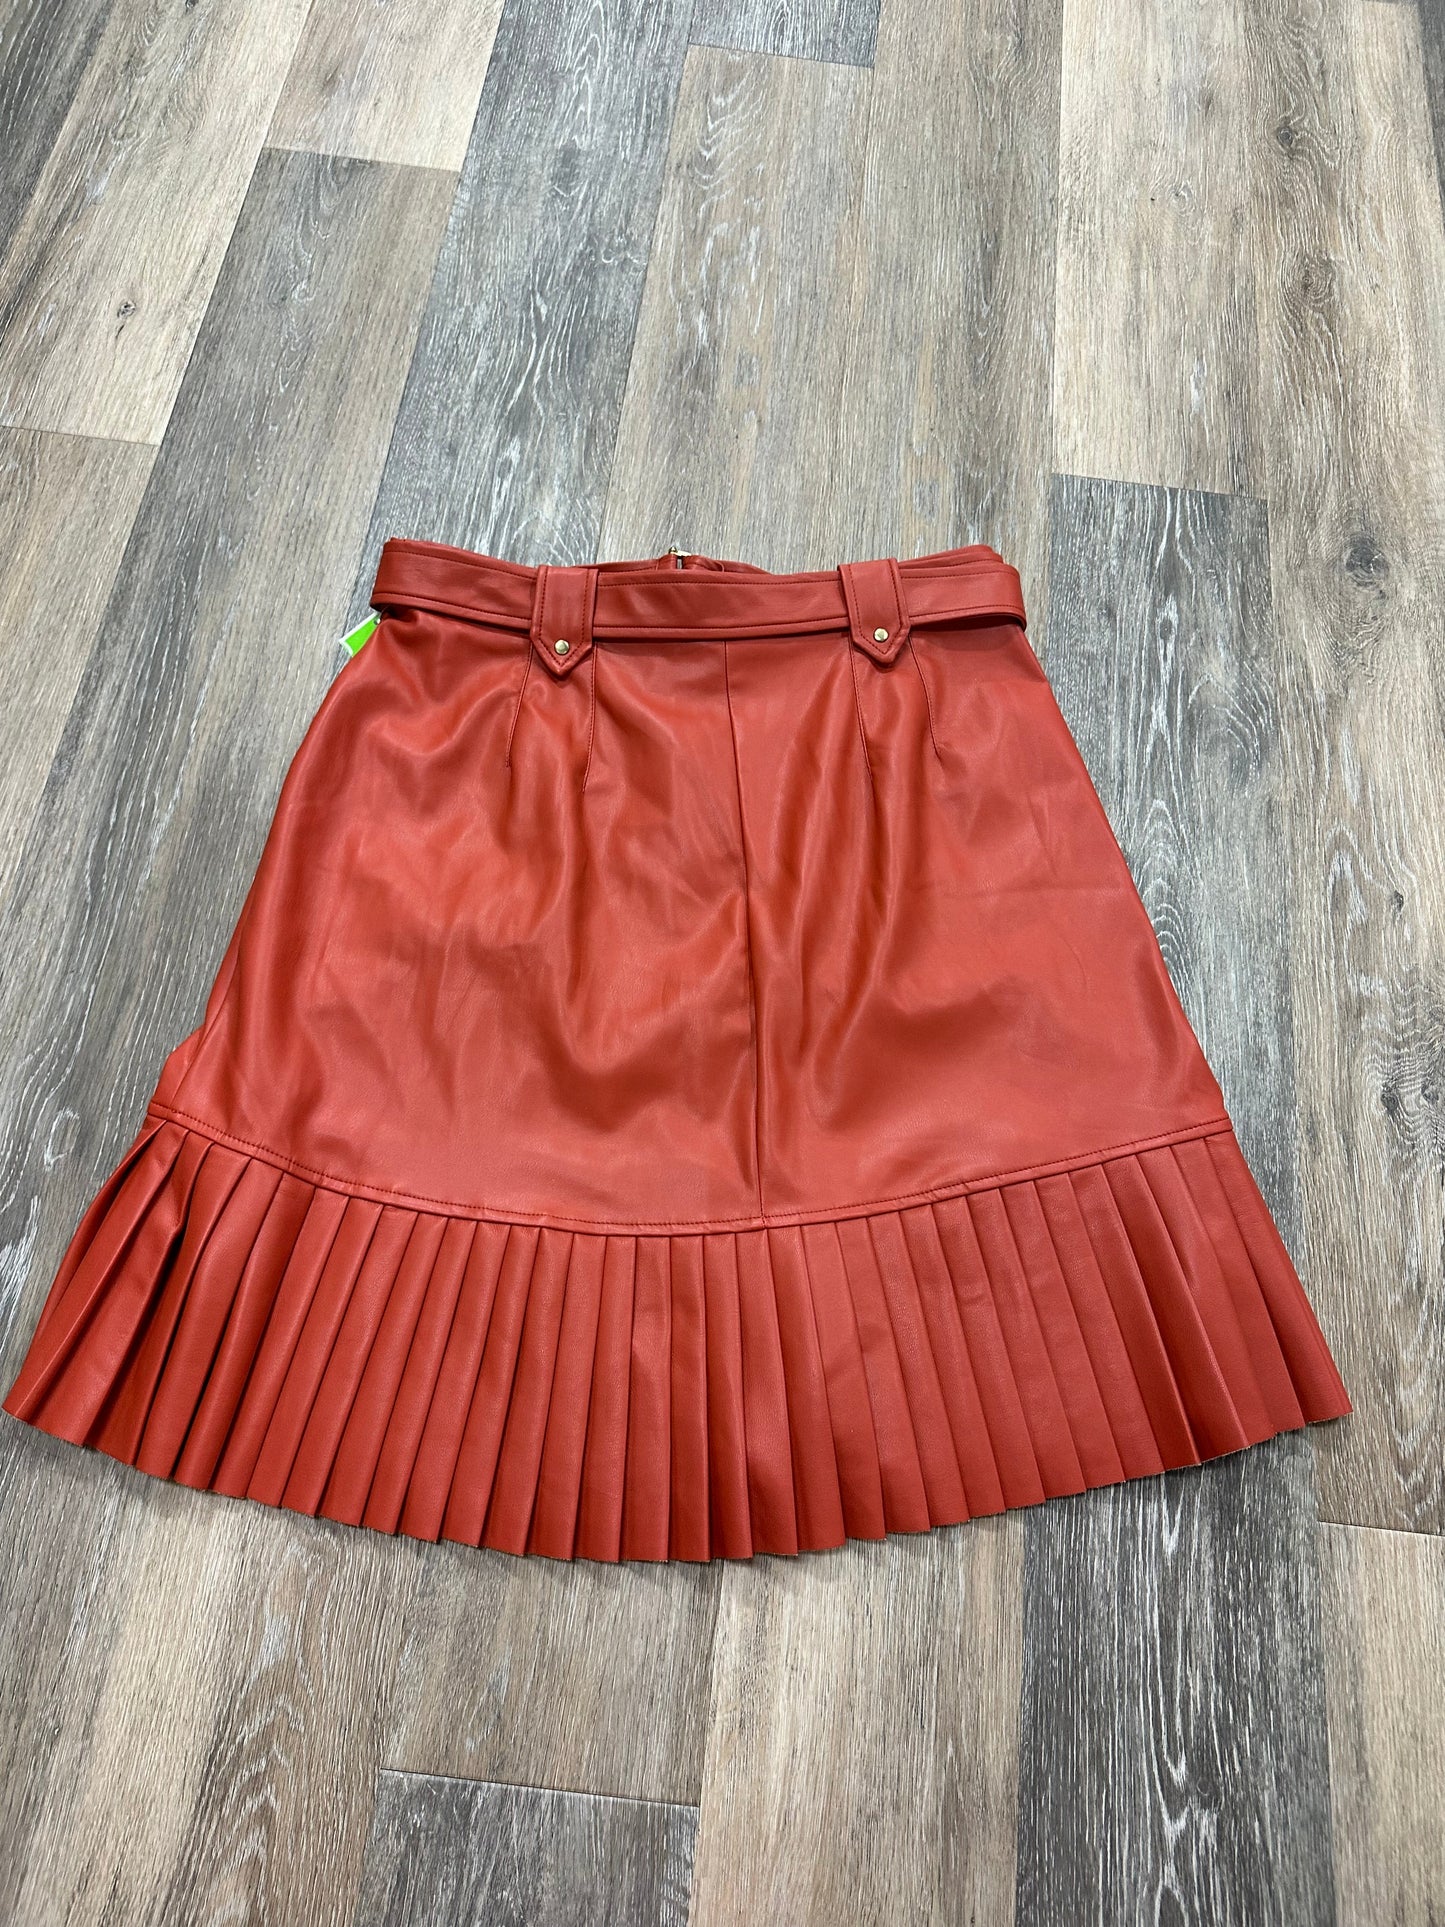 Skirt Midi By Ryegrass  Size: 10